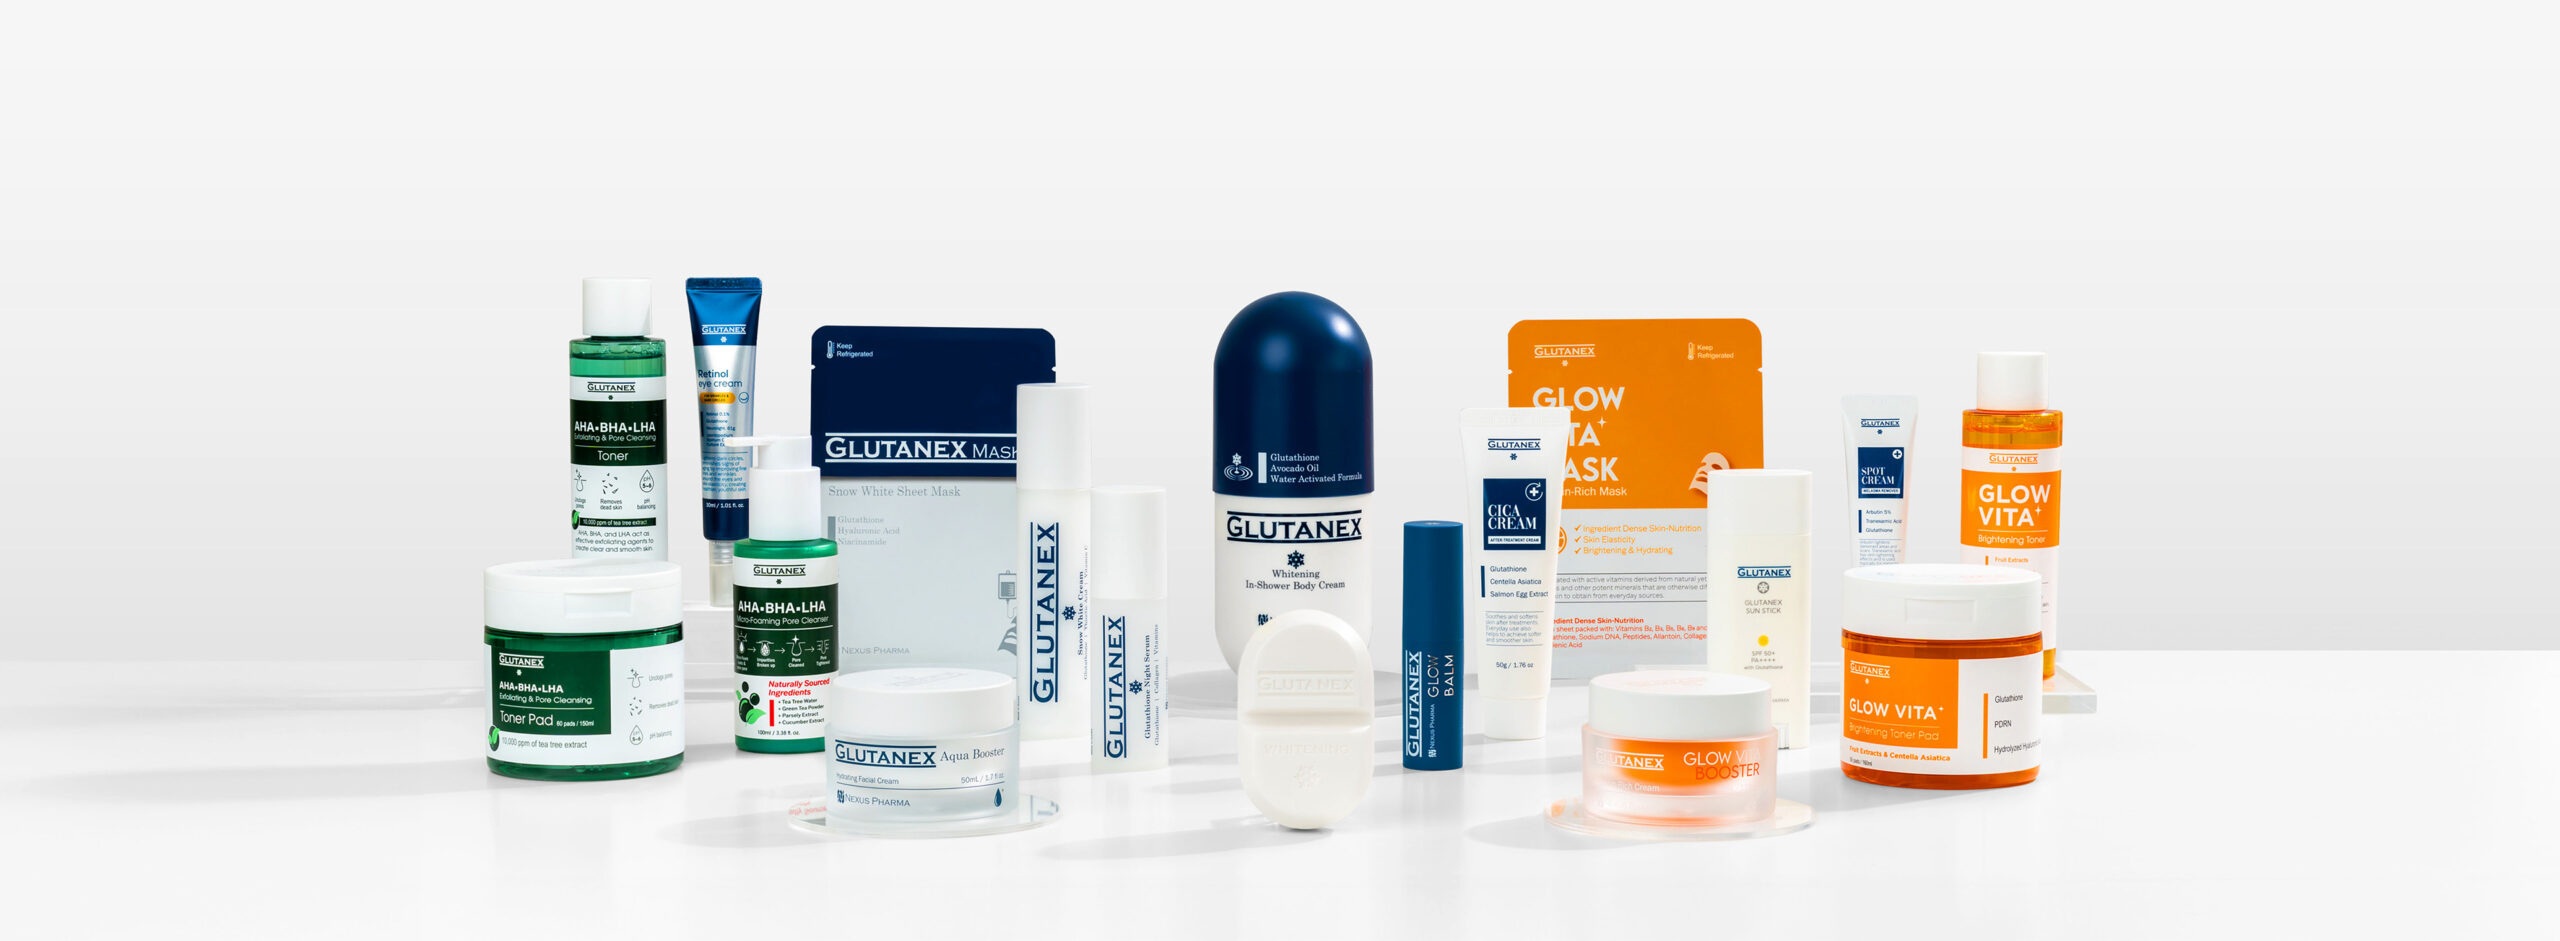 Nexus Pharma's skincare line is composed of Glutanex Line, AHA-BHA-LHA line, and Glow Vita Line